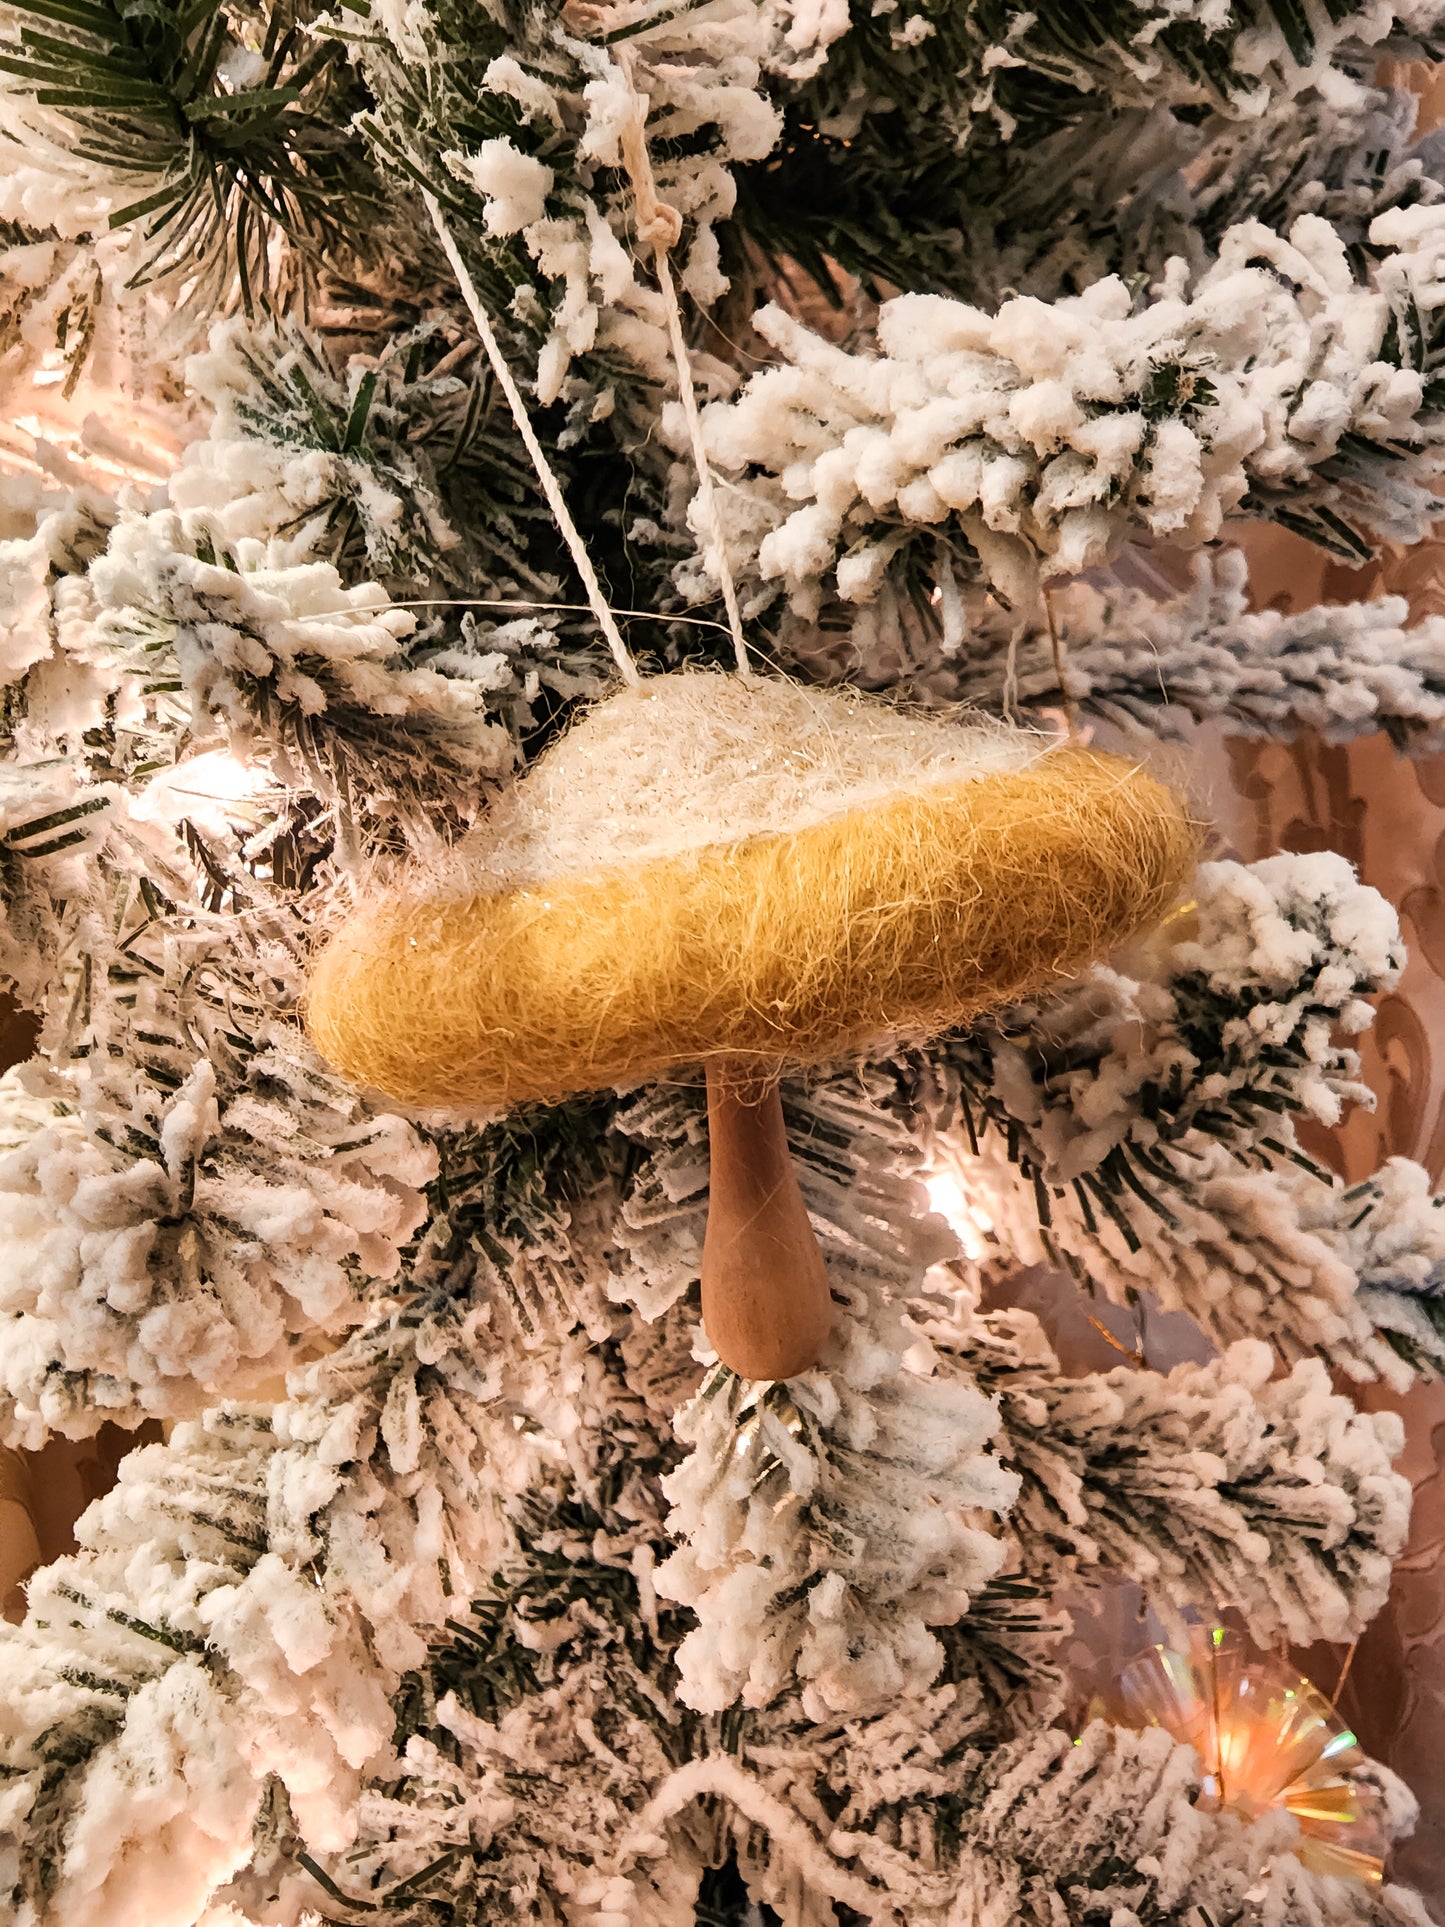 Mushroom Ornament